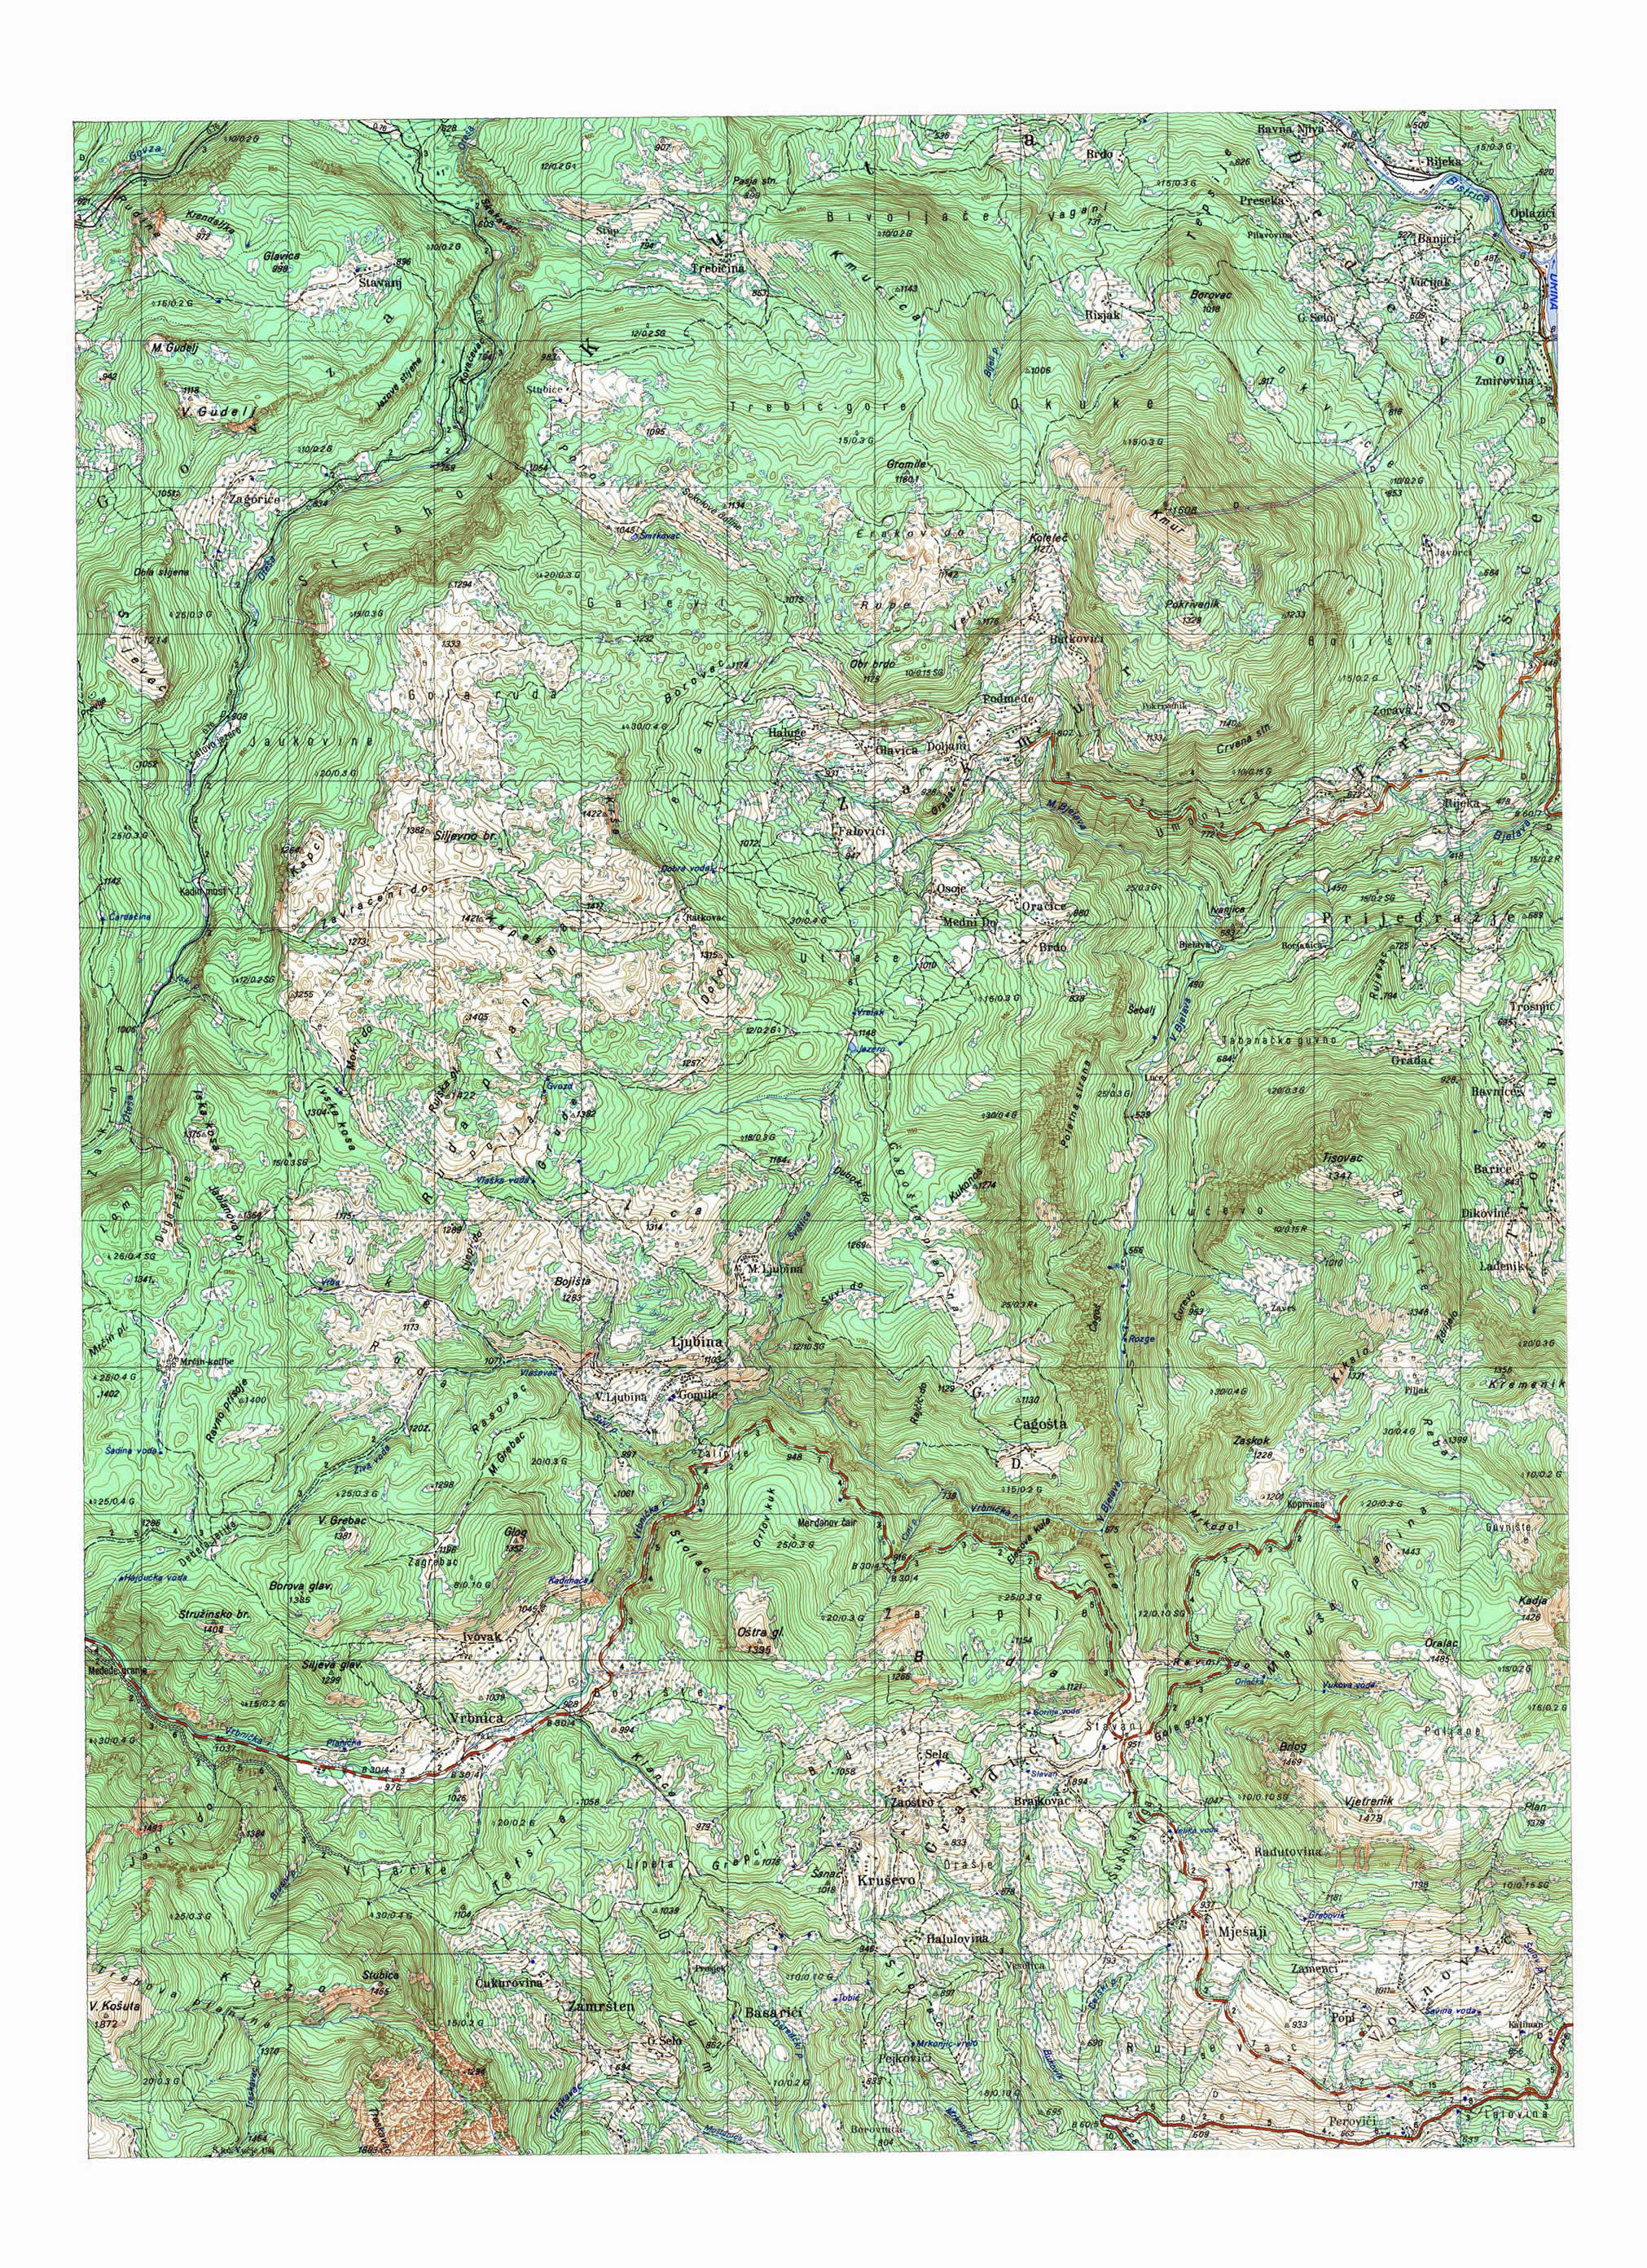  topografska karta srbije 25000 JNA  dedevo